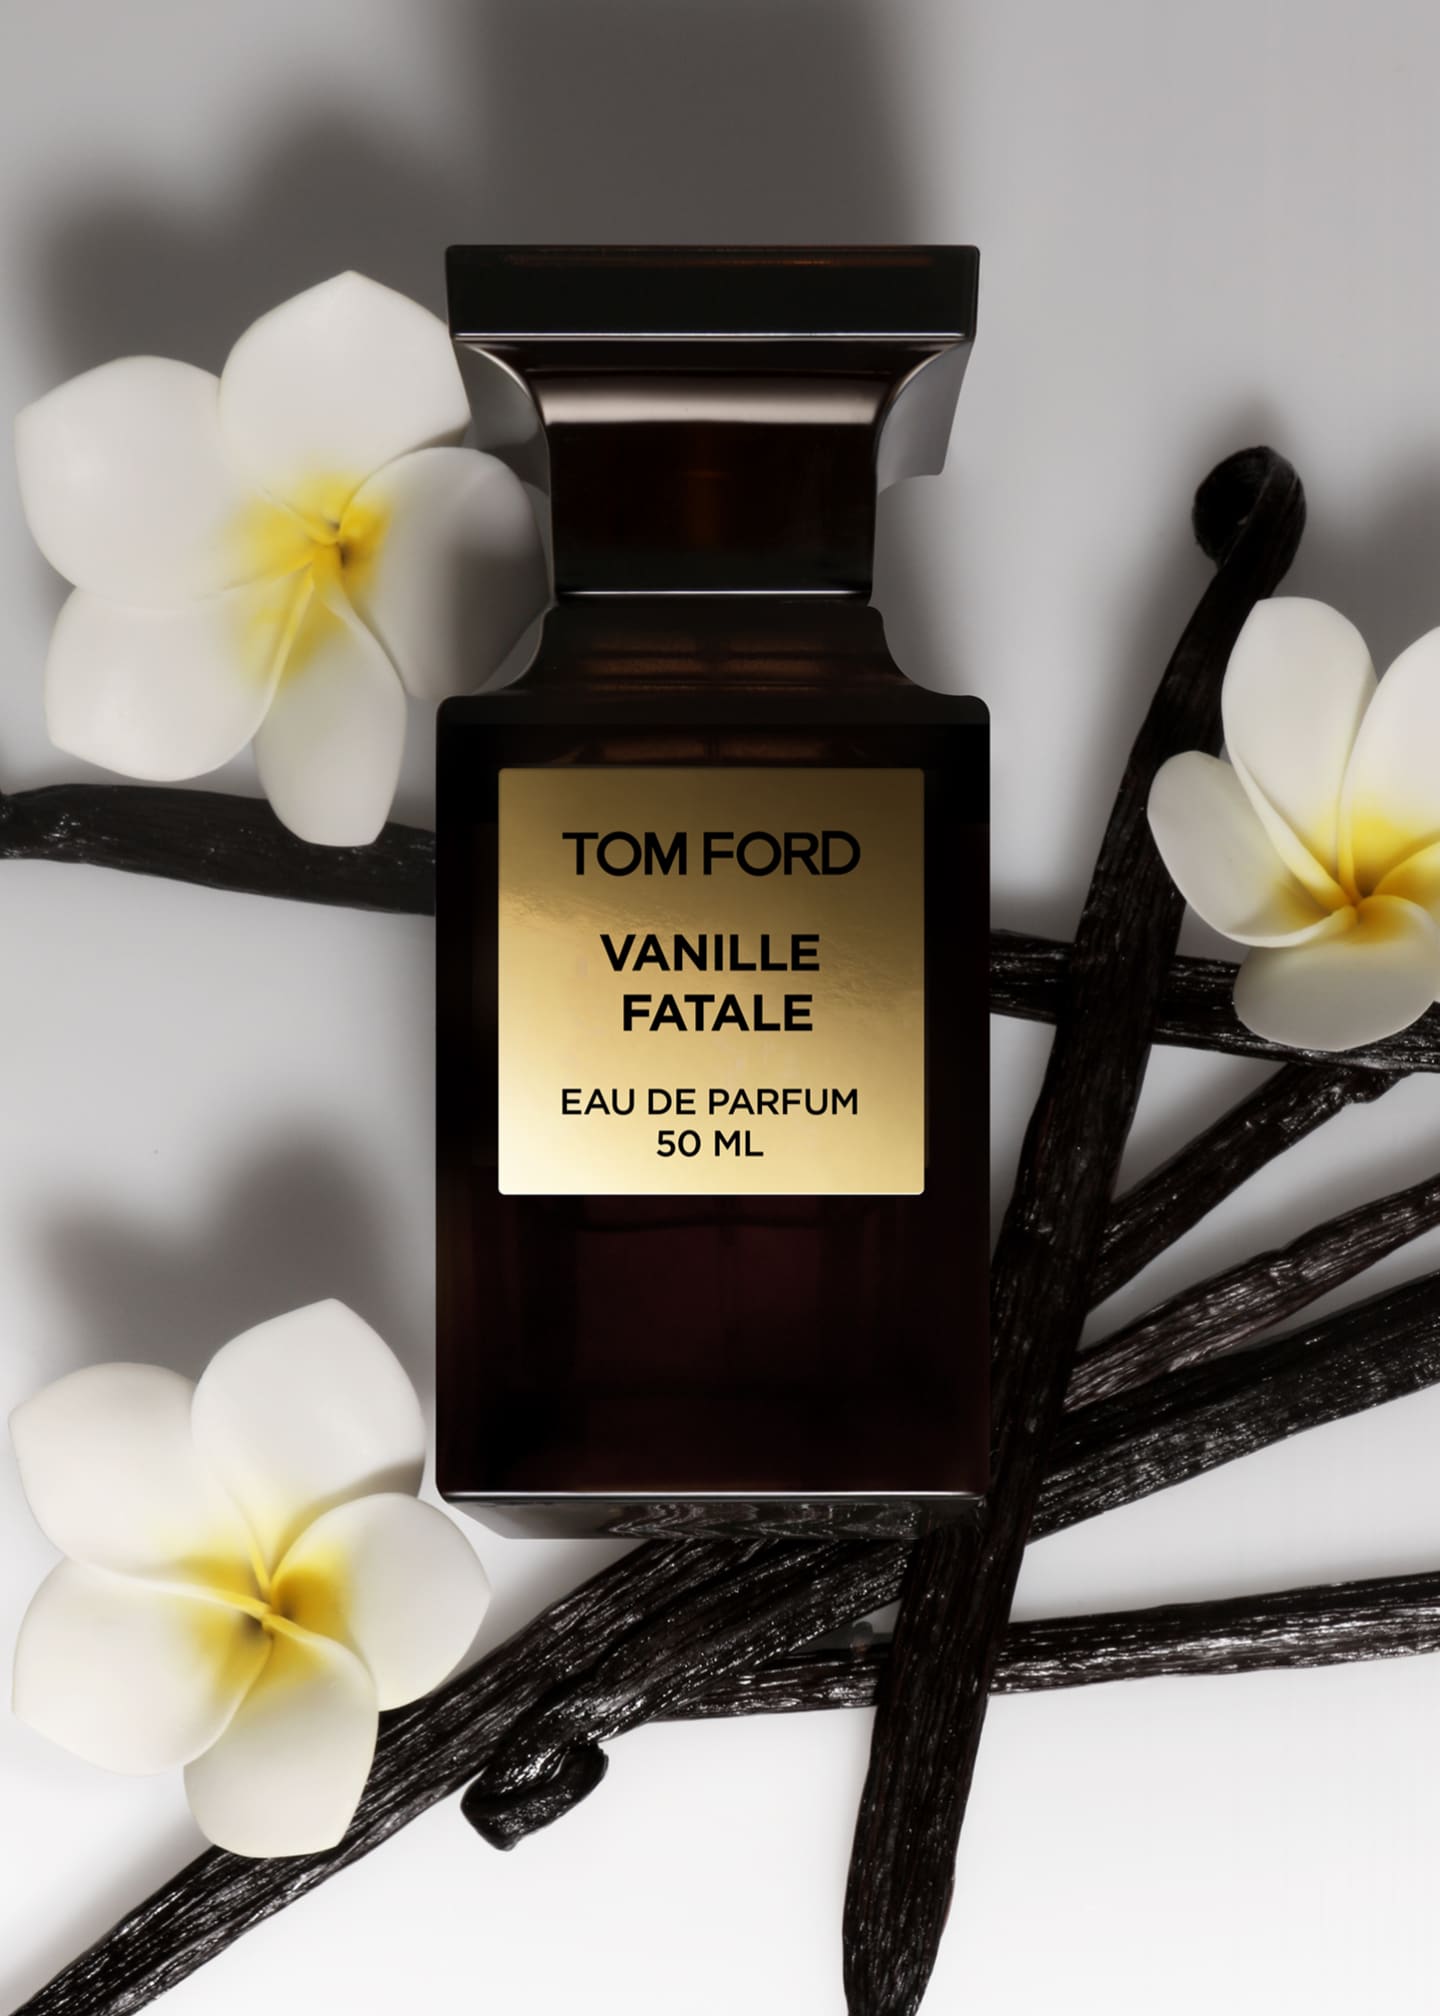 TOM FORD Vanille Fatale Eau de Parfum, 1.7 oz. - Bergdorf Goodman